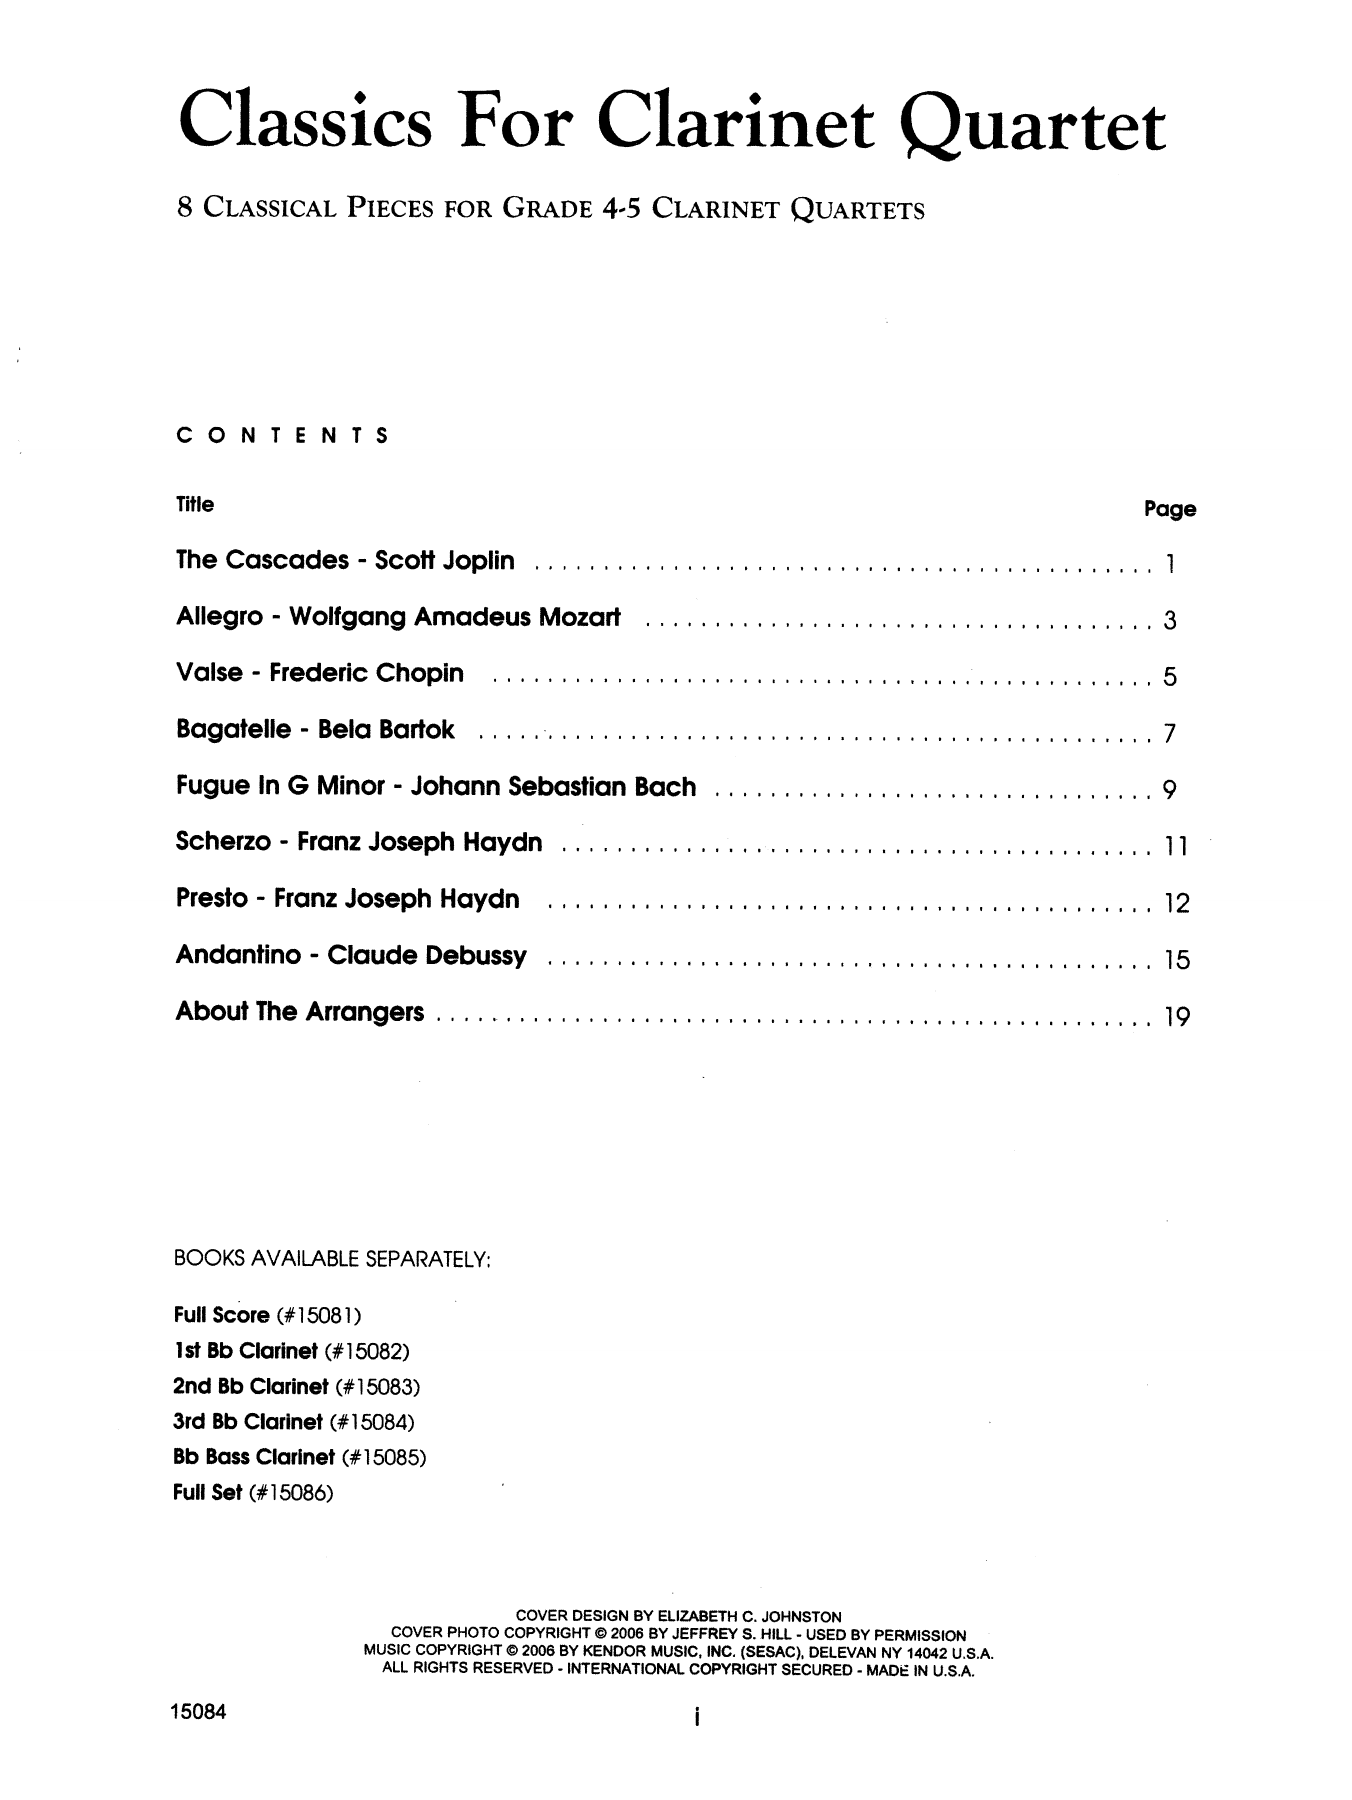 Download Richard Johnston Classics For Clarinet Quartet - 3rd Bb Sheet Music